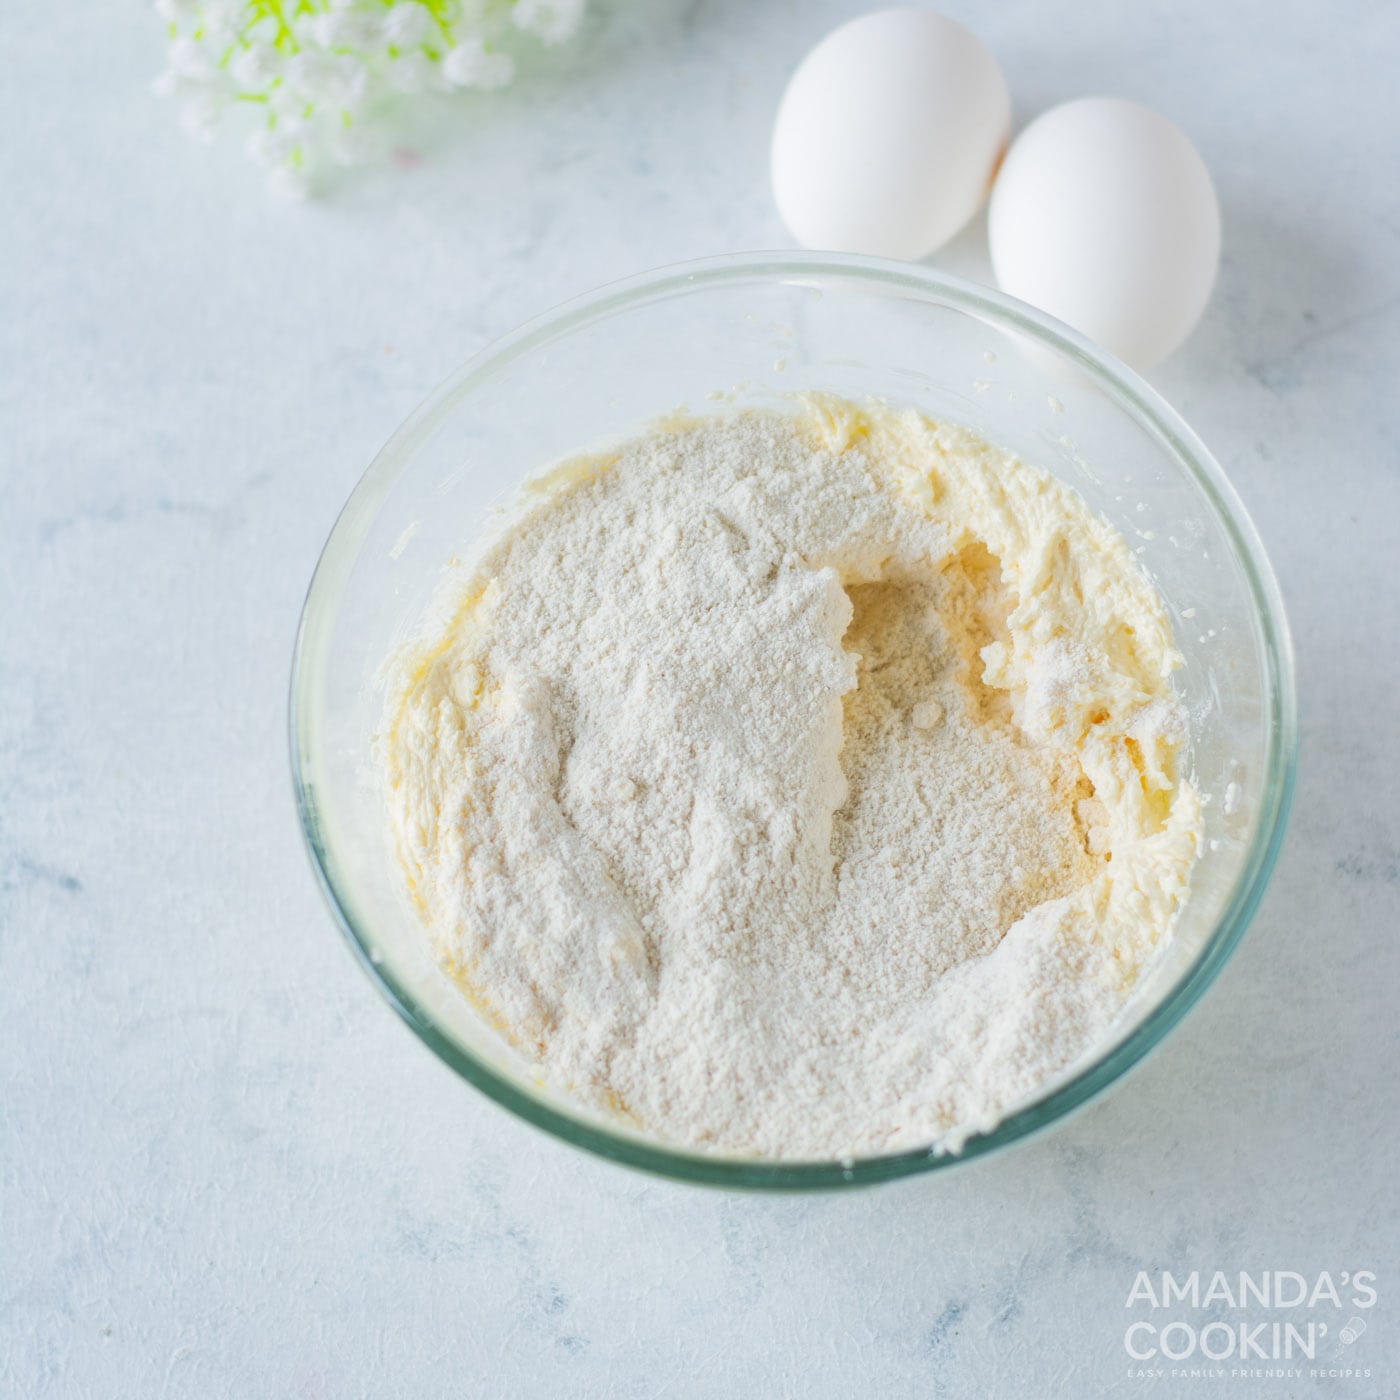 almond flour, all-purpose flour, salt, and cinnamon in a bowl